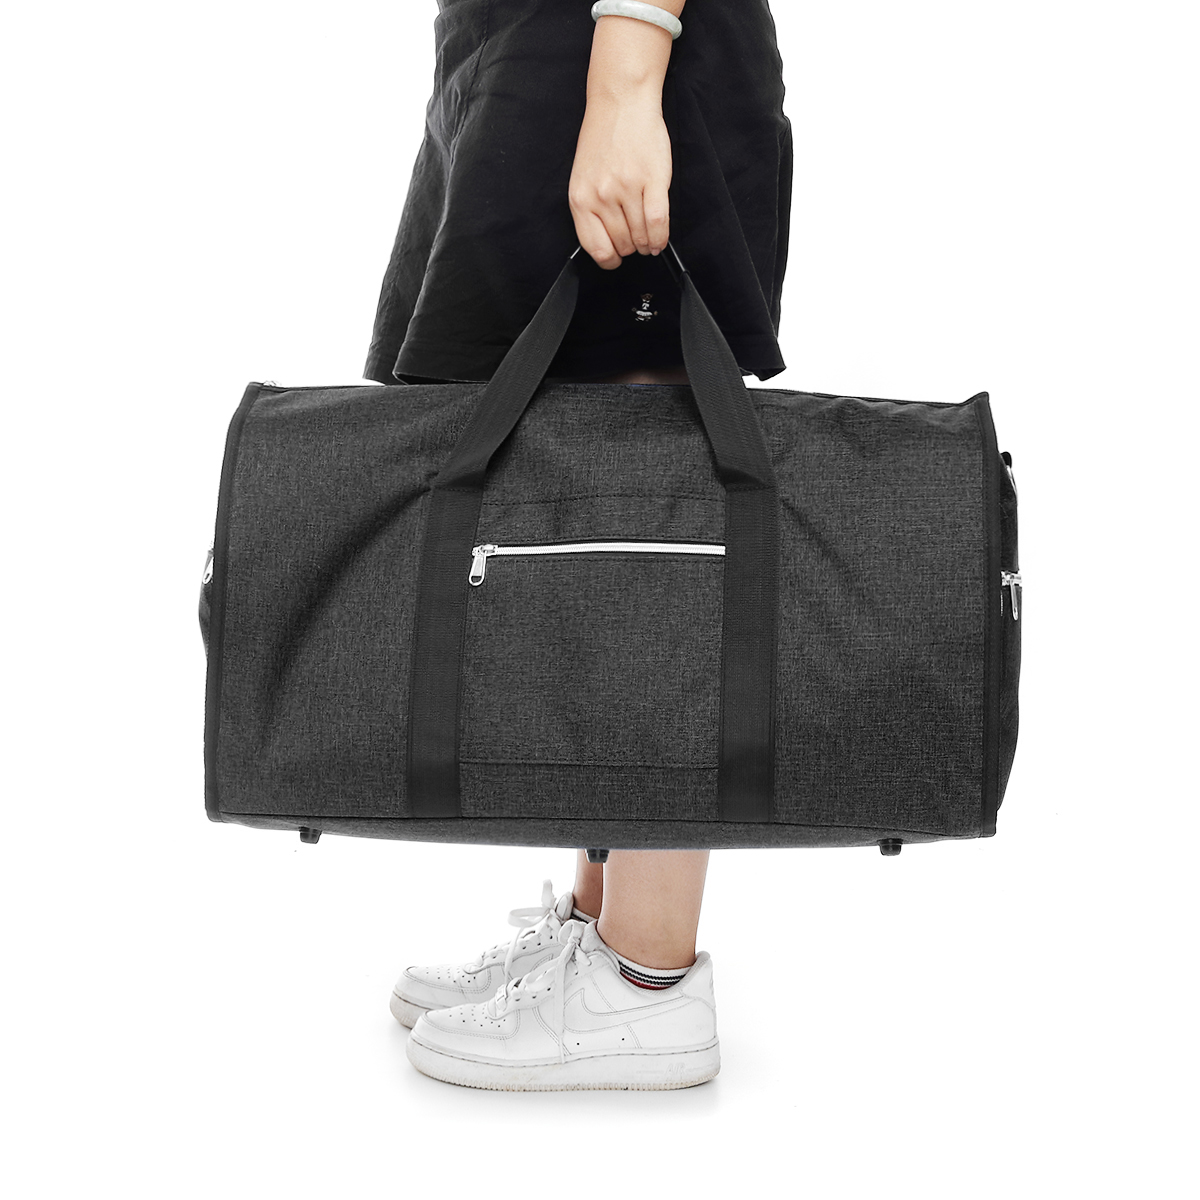 47L-Outdoor-Portable-Travel-Luggage-Bag-Suit-Dress-Garment-Storage-Handbag-Sports-Gym-Bag-1553950-9